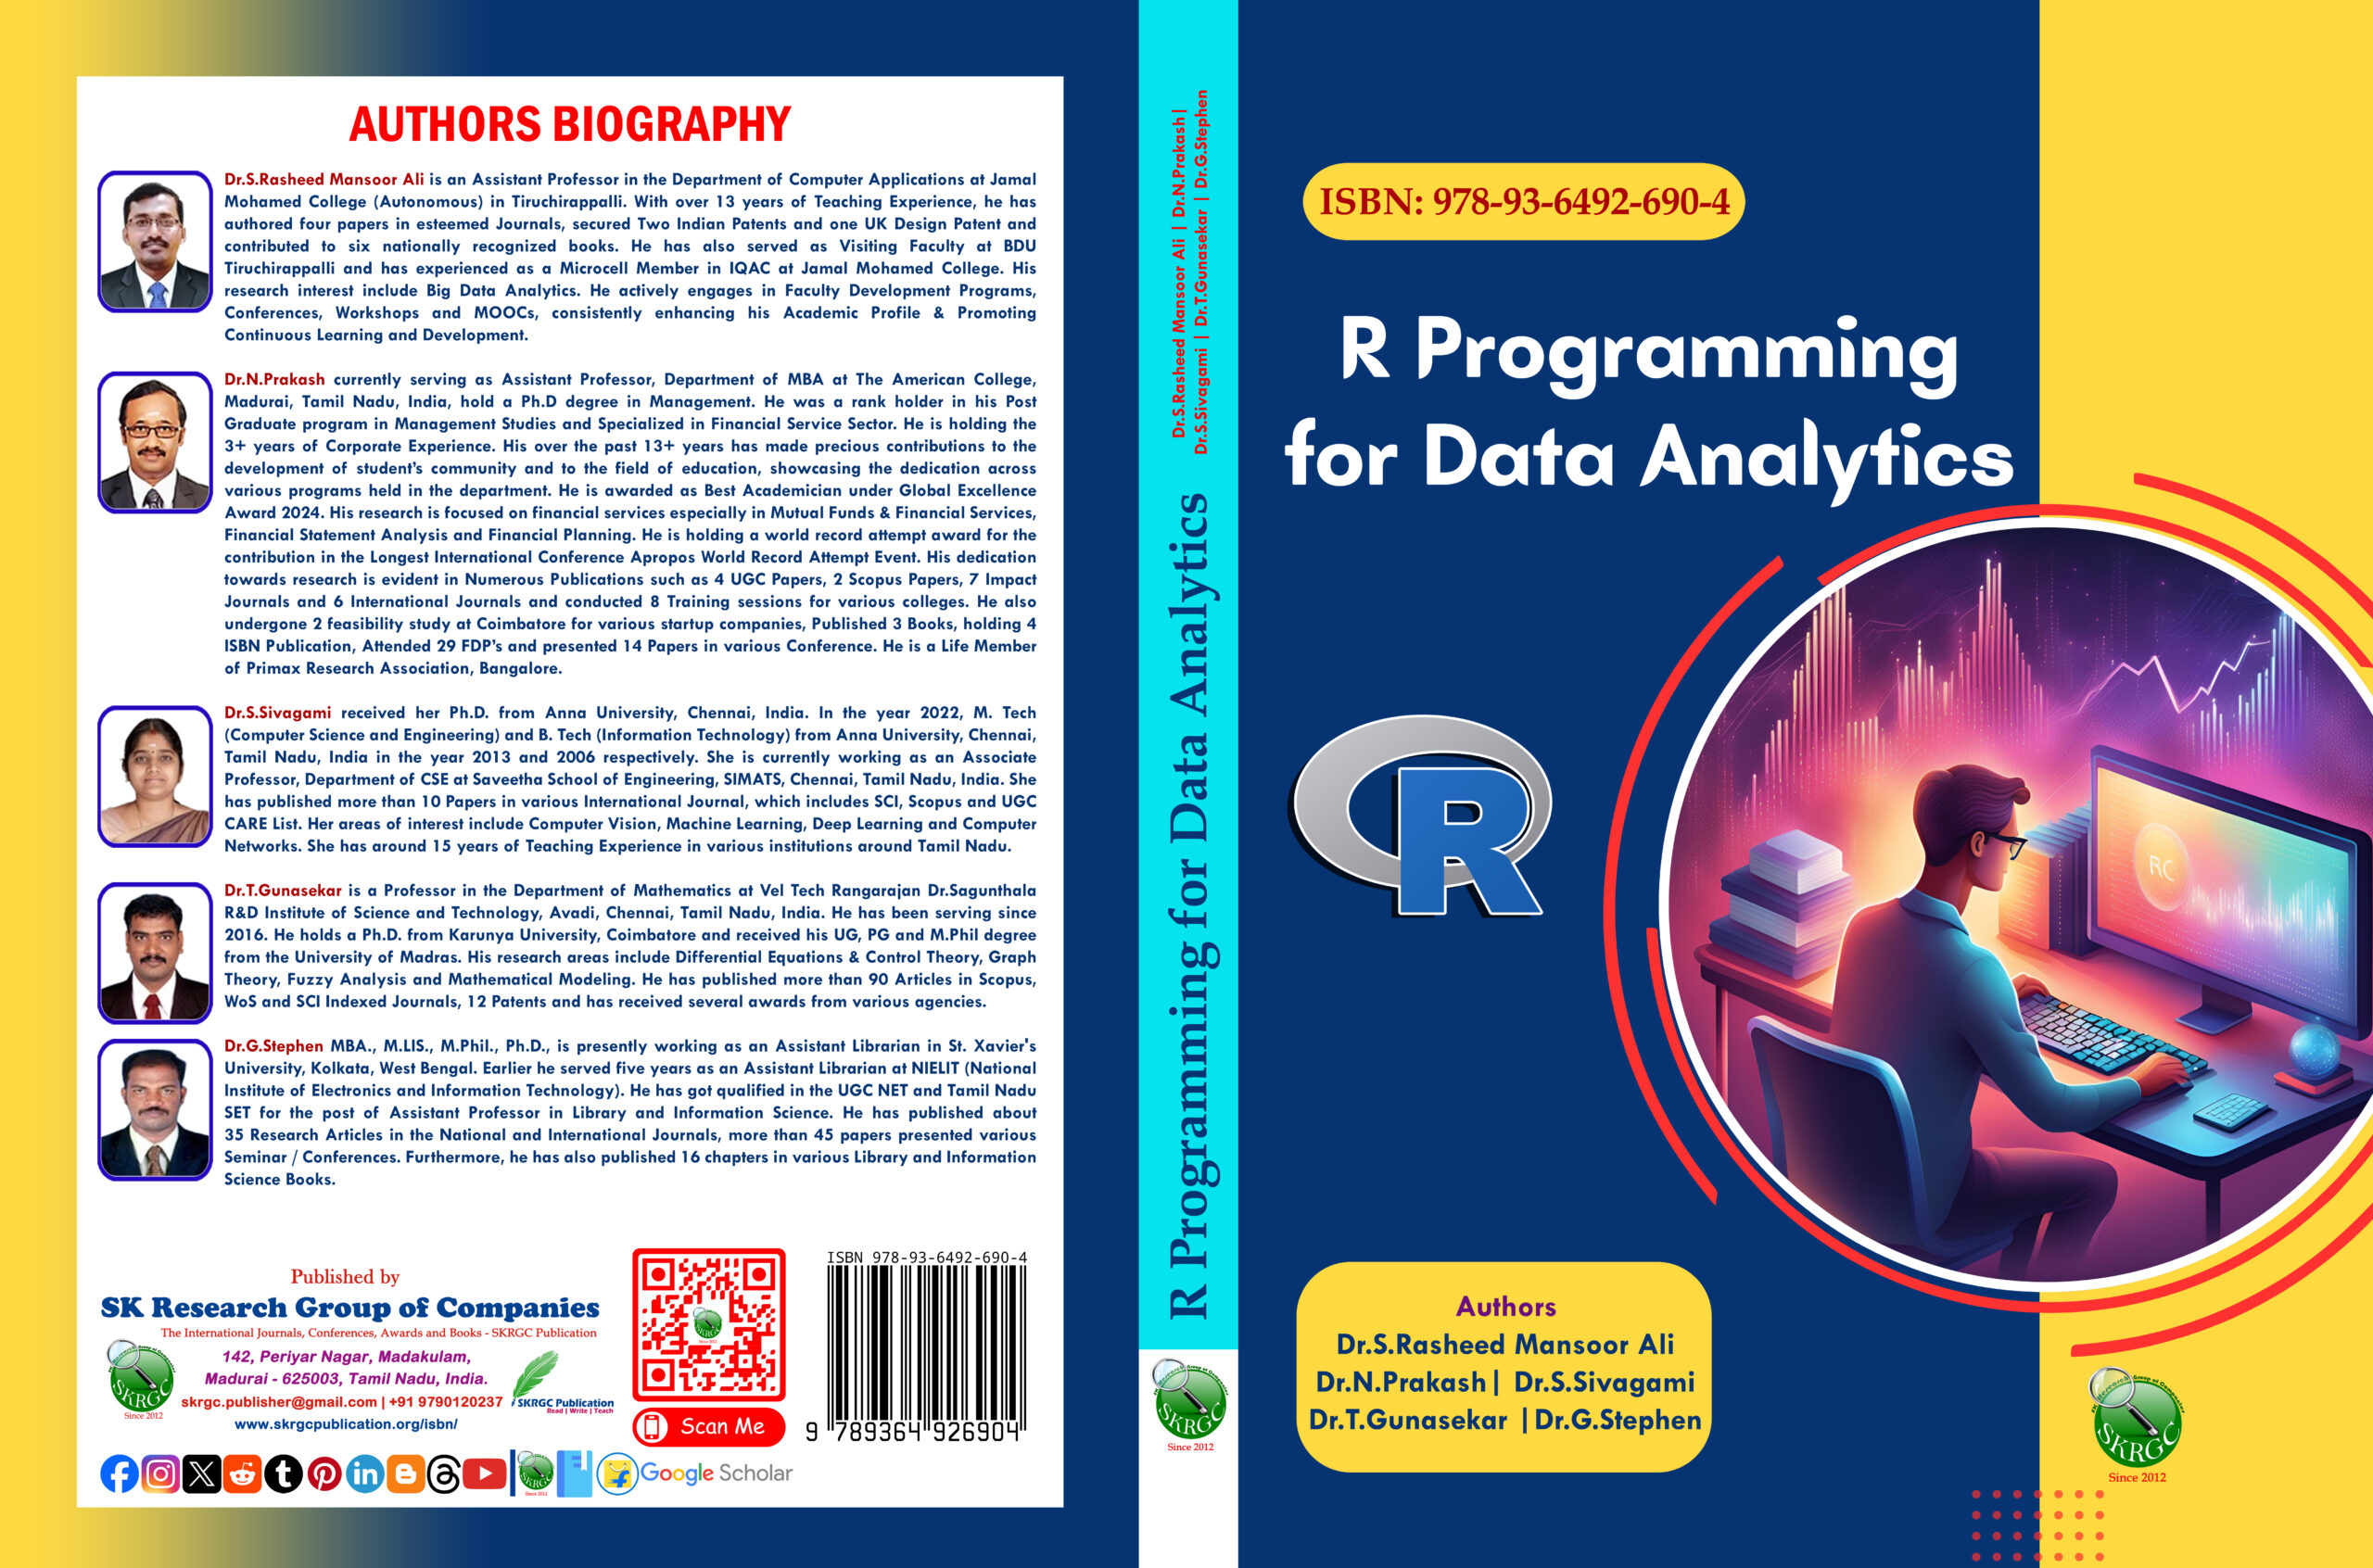 R Programming for Data Analytics